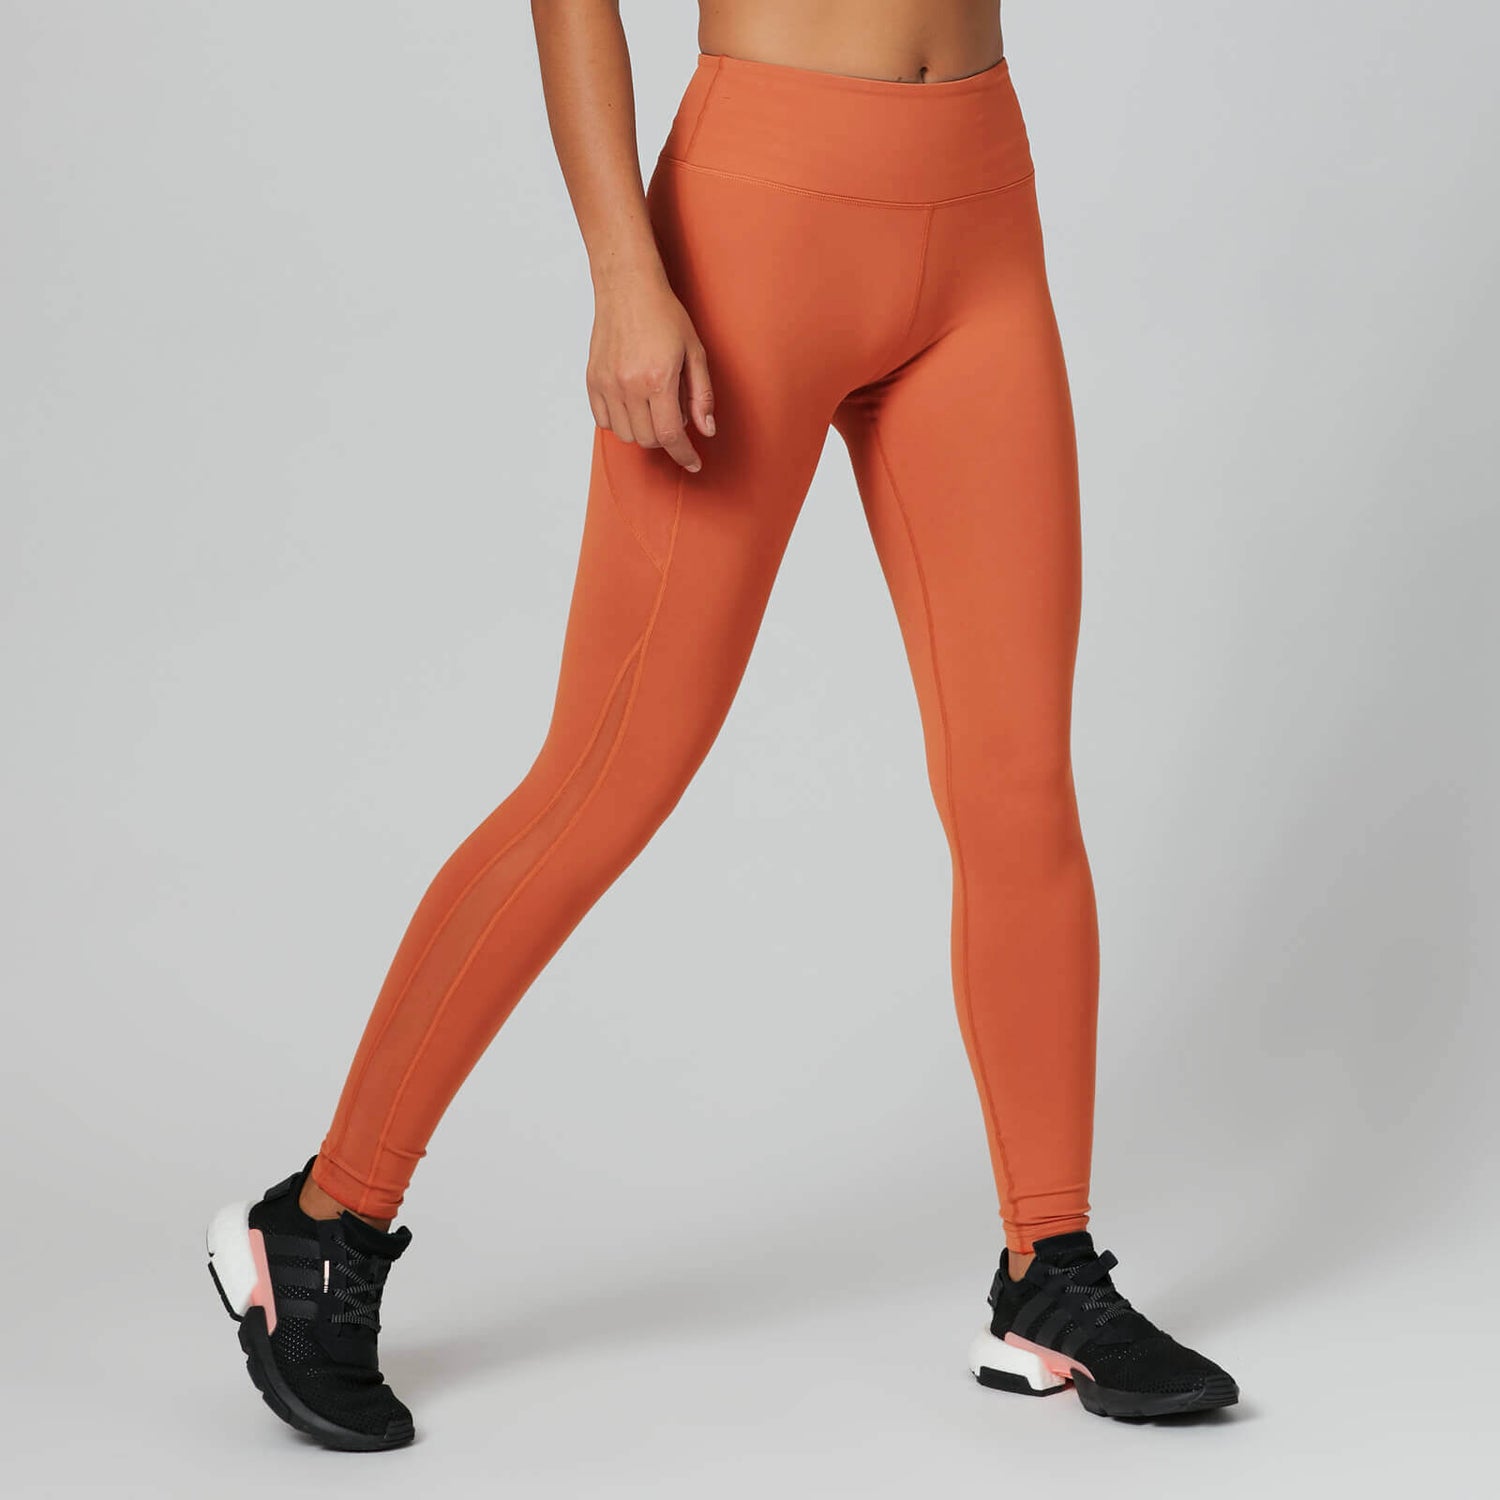 Vami Cotton Churidar Legging For Women's - Vibrant Orange | inwear.in